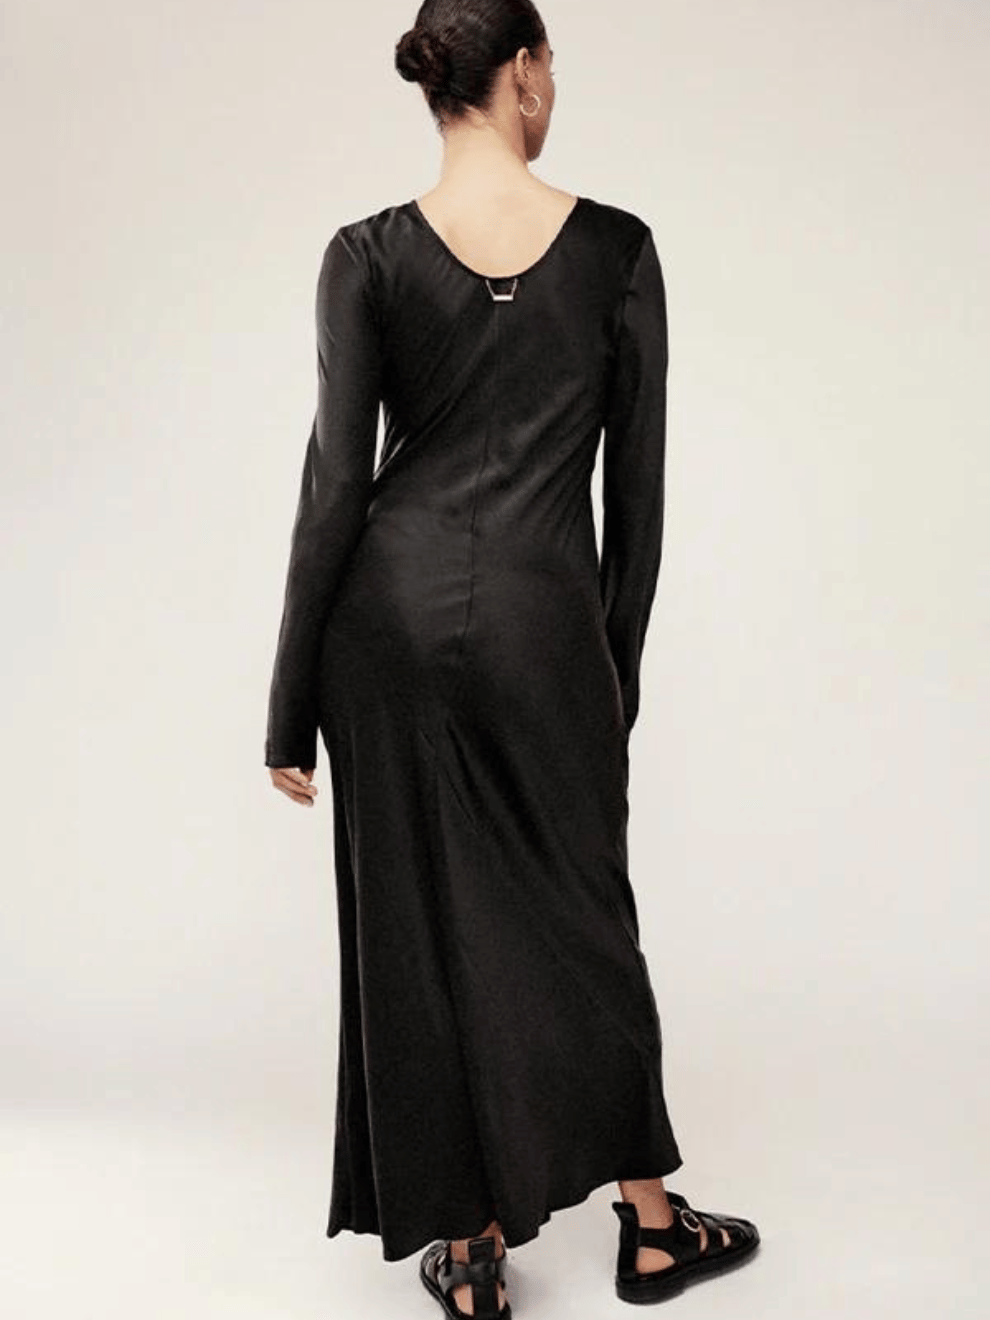 Full Sleeve Bias Cut Dress in Black